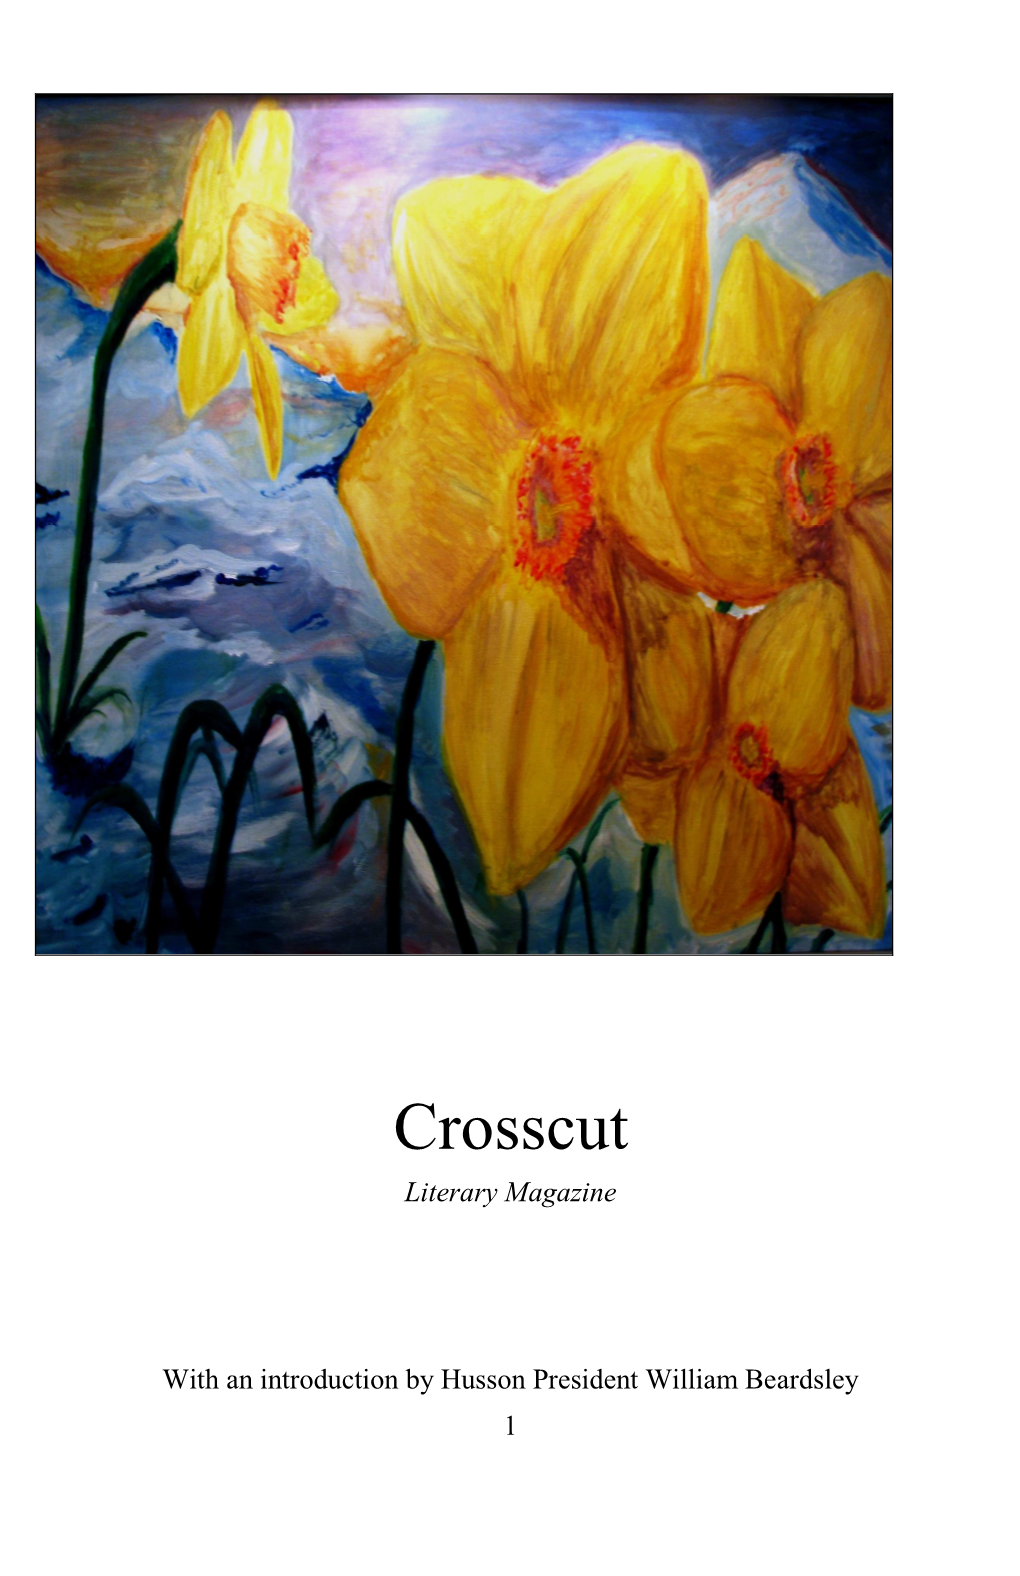 2009 Crosscut Literary Magazine